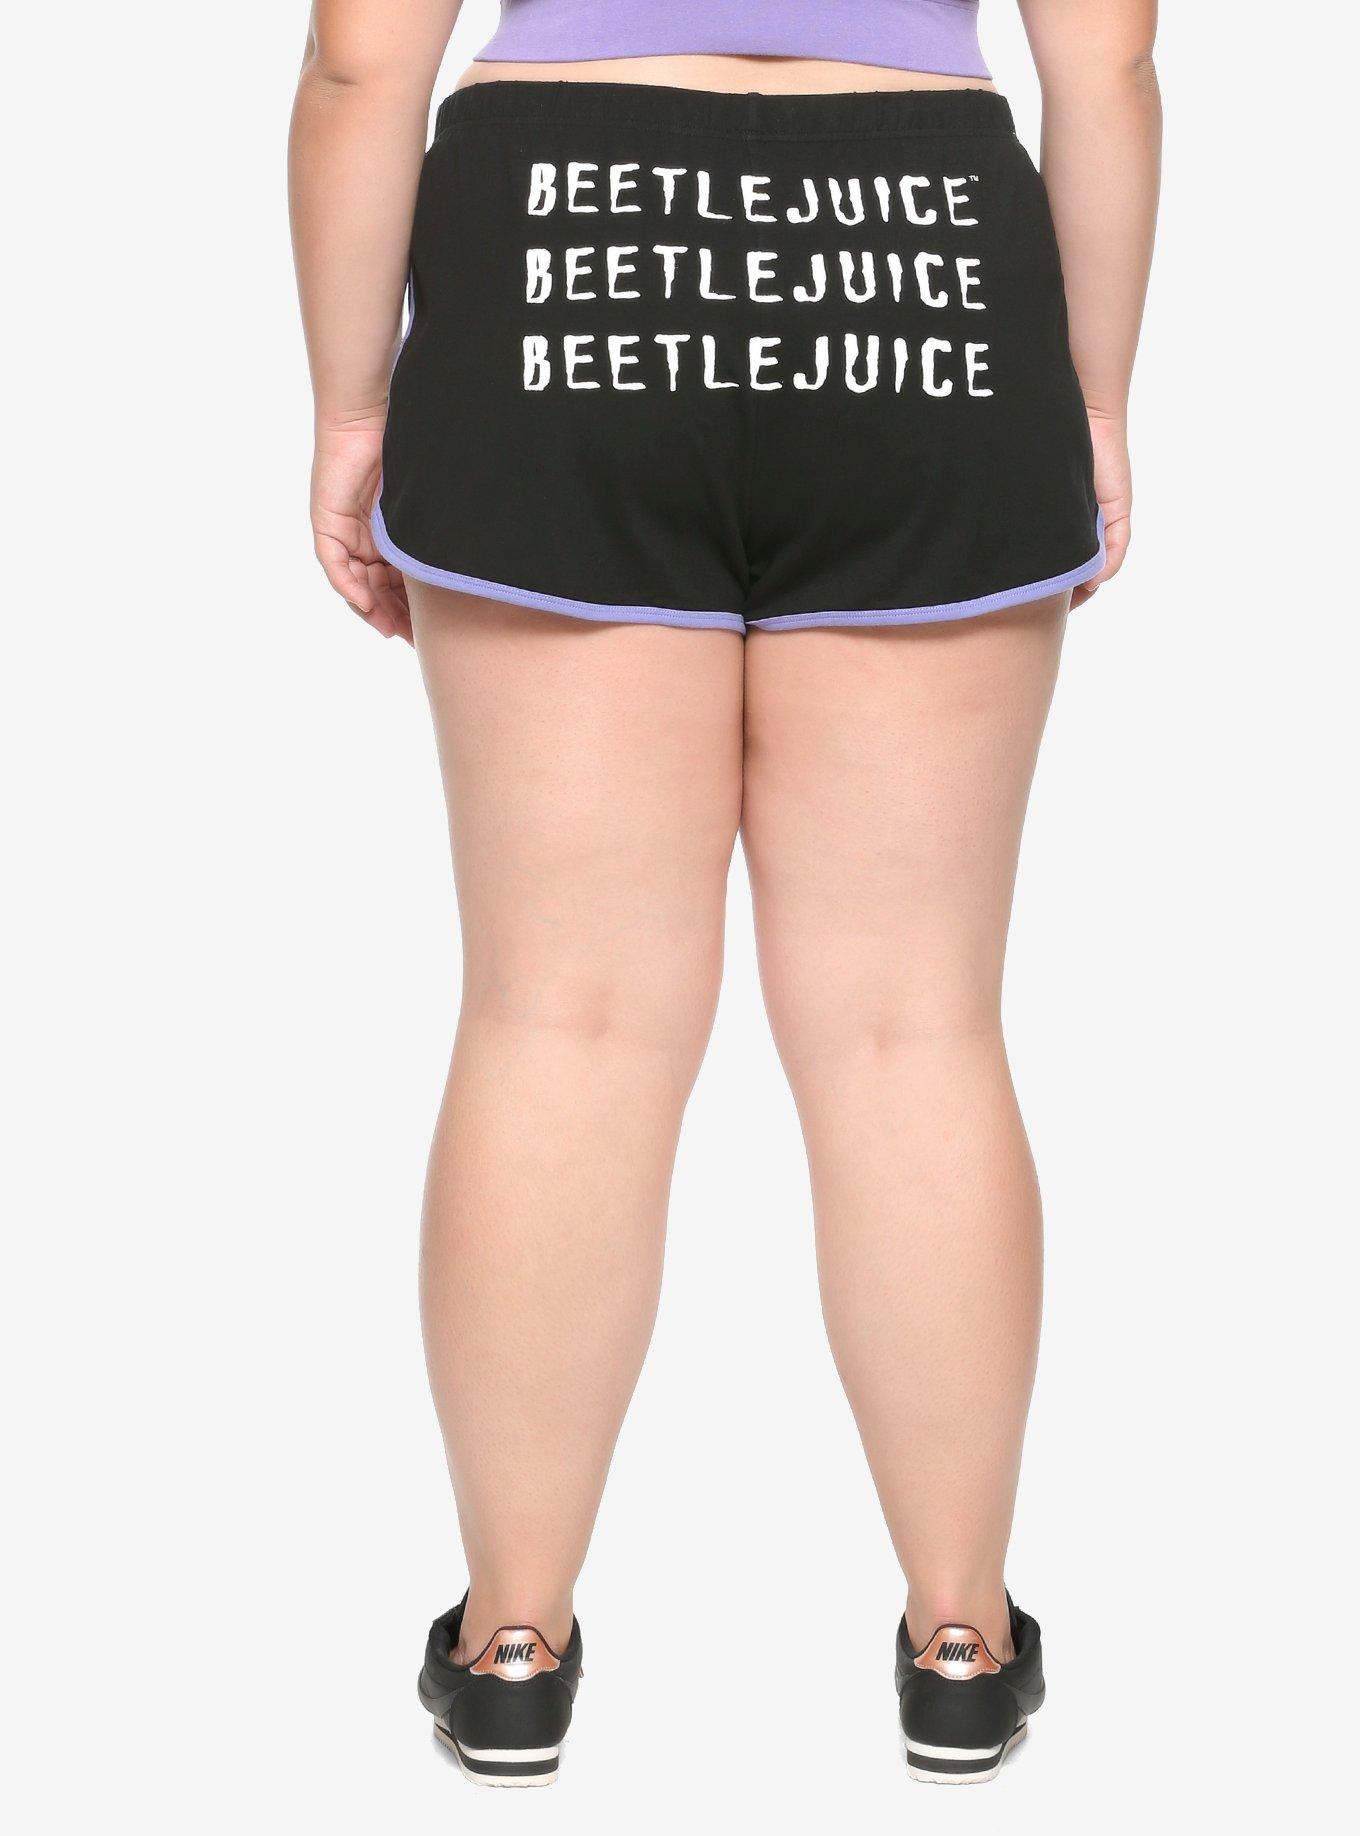 Beetlejuice Sandworm Girls Soft Shorts Plus Size, BLACK, alternate